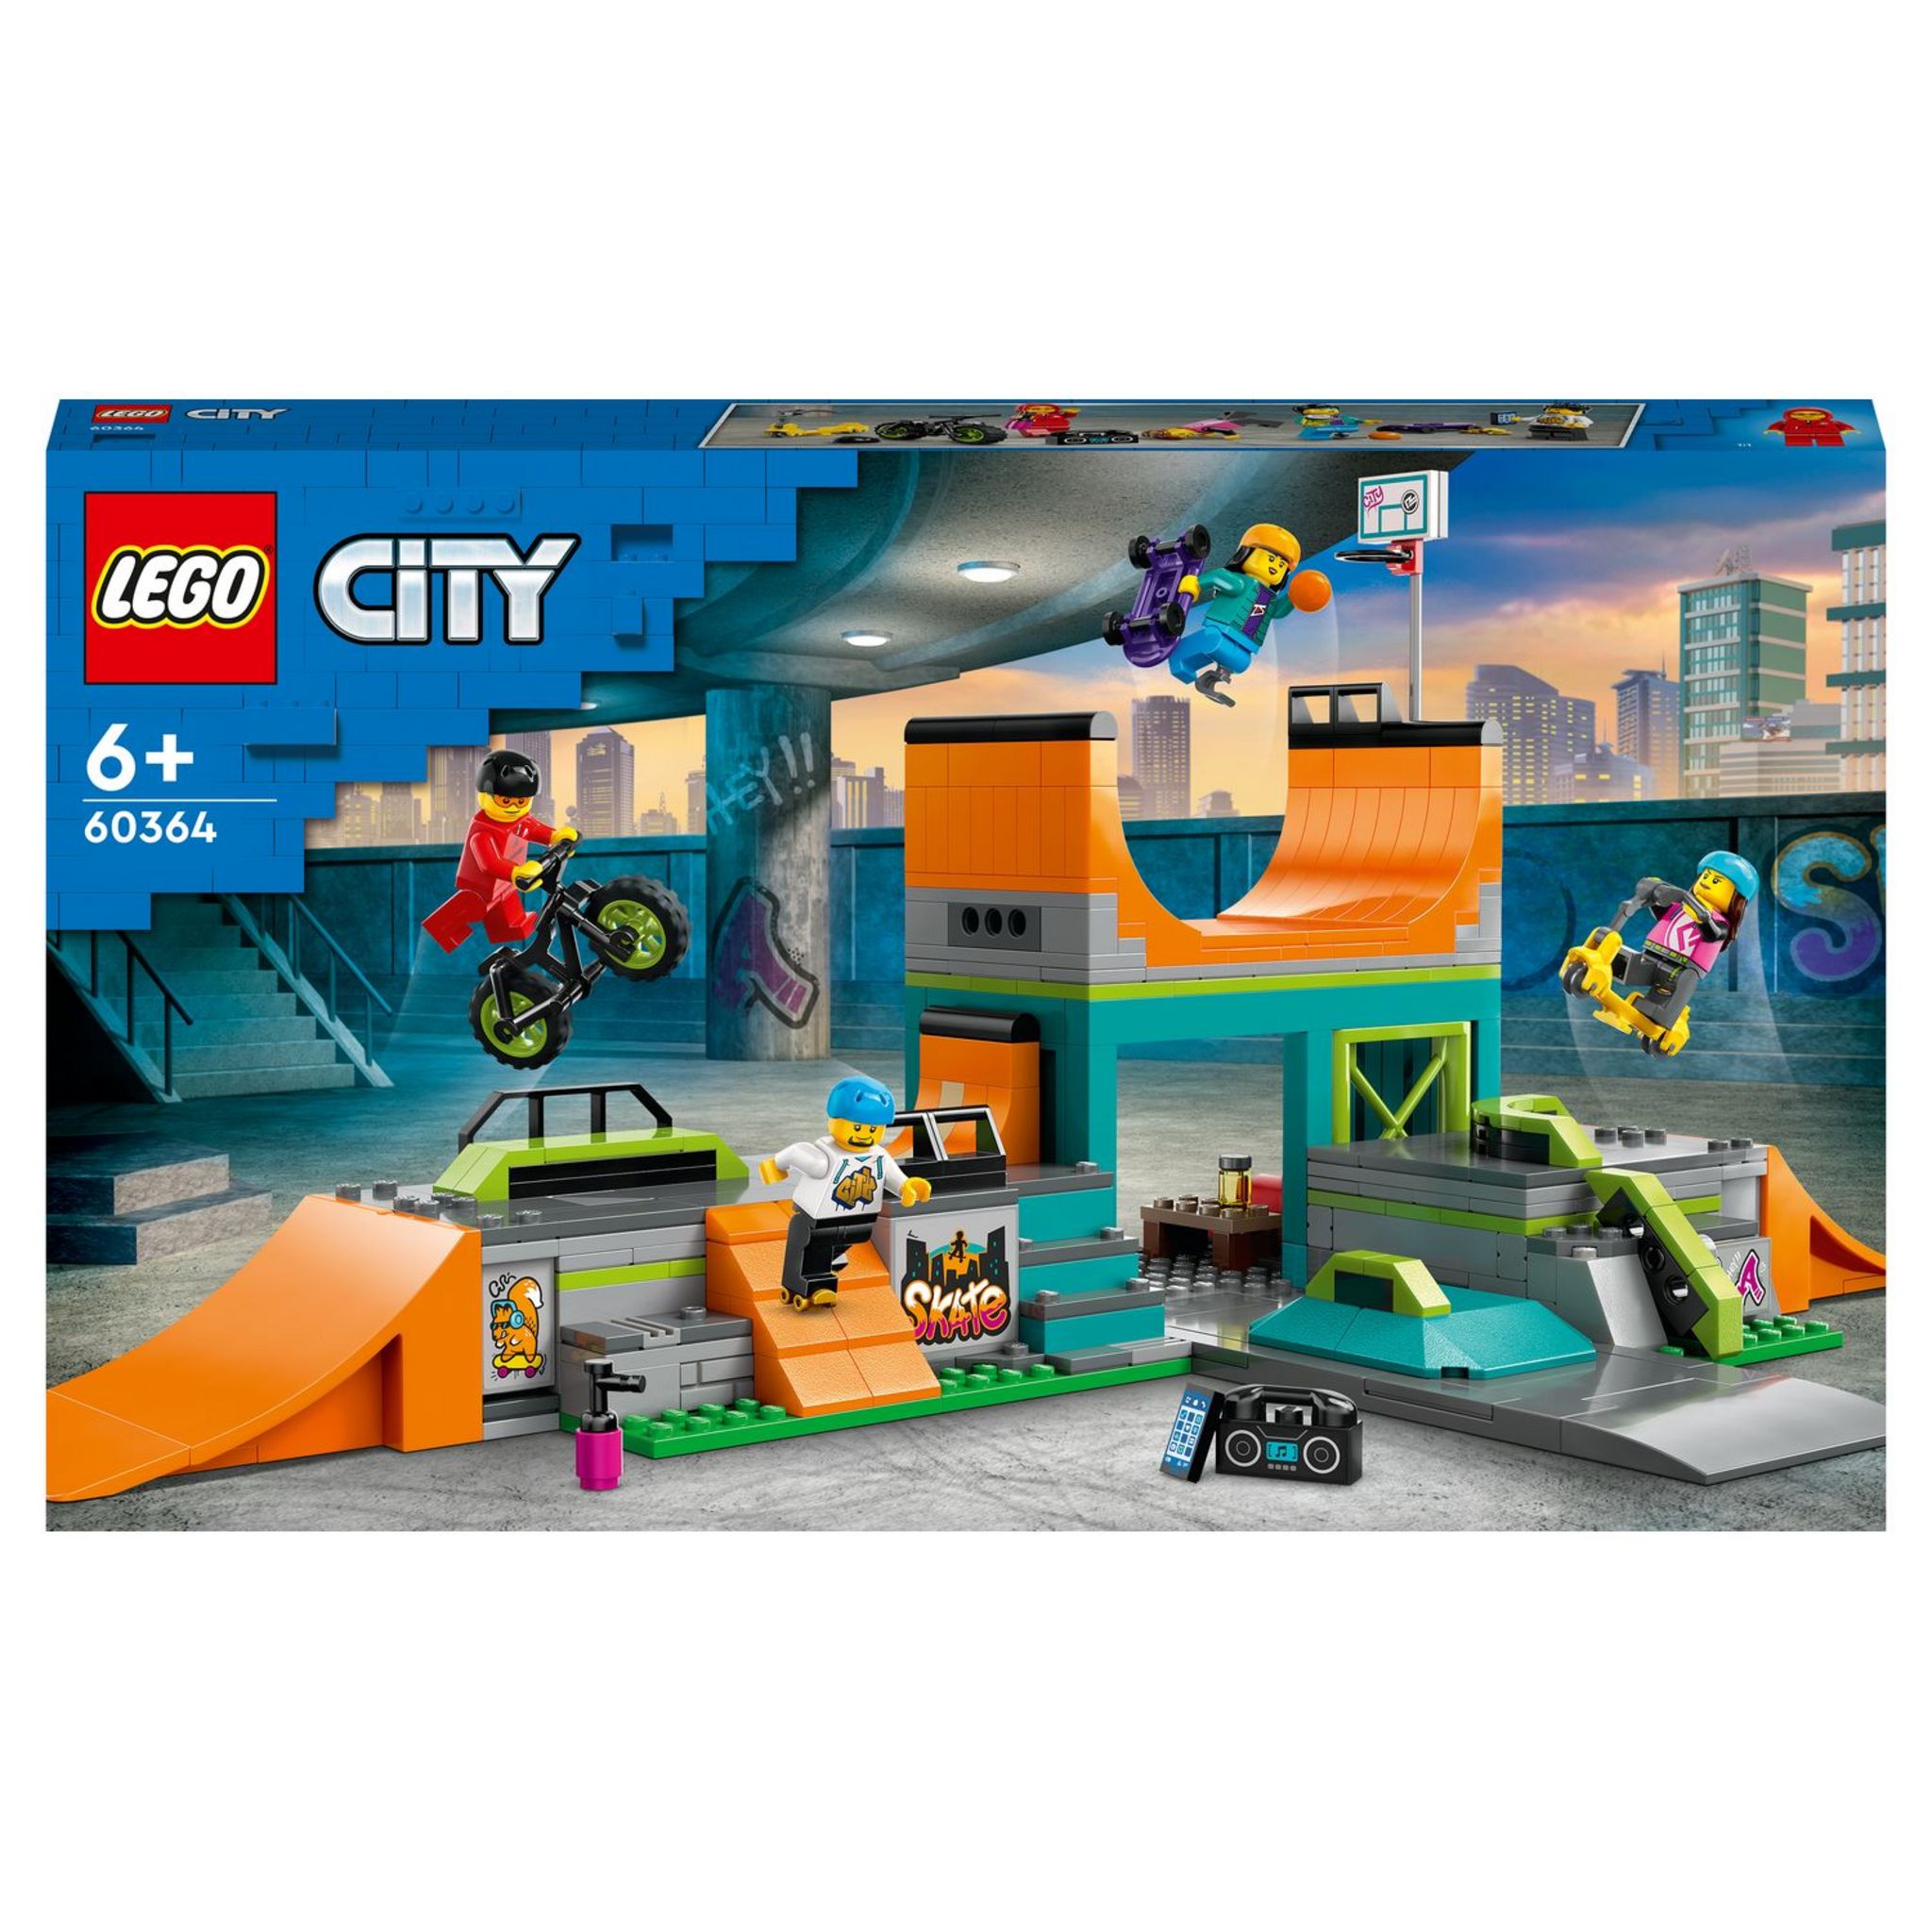 LEGO City 60290 pas cher, Le skatepark